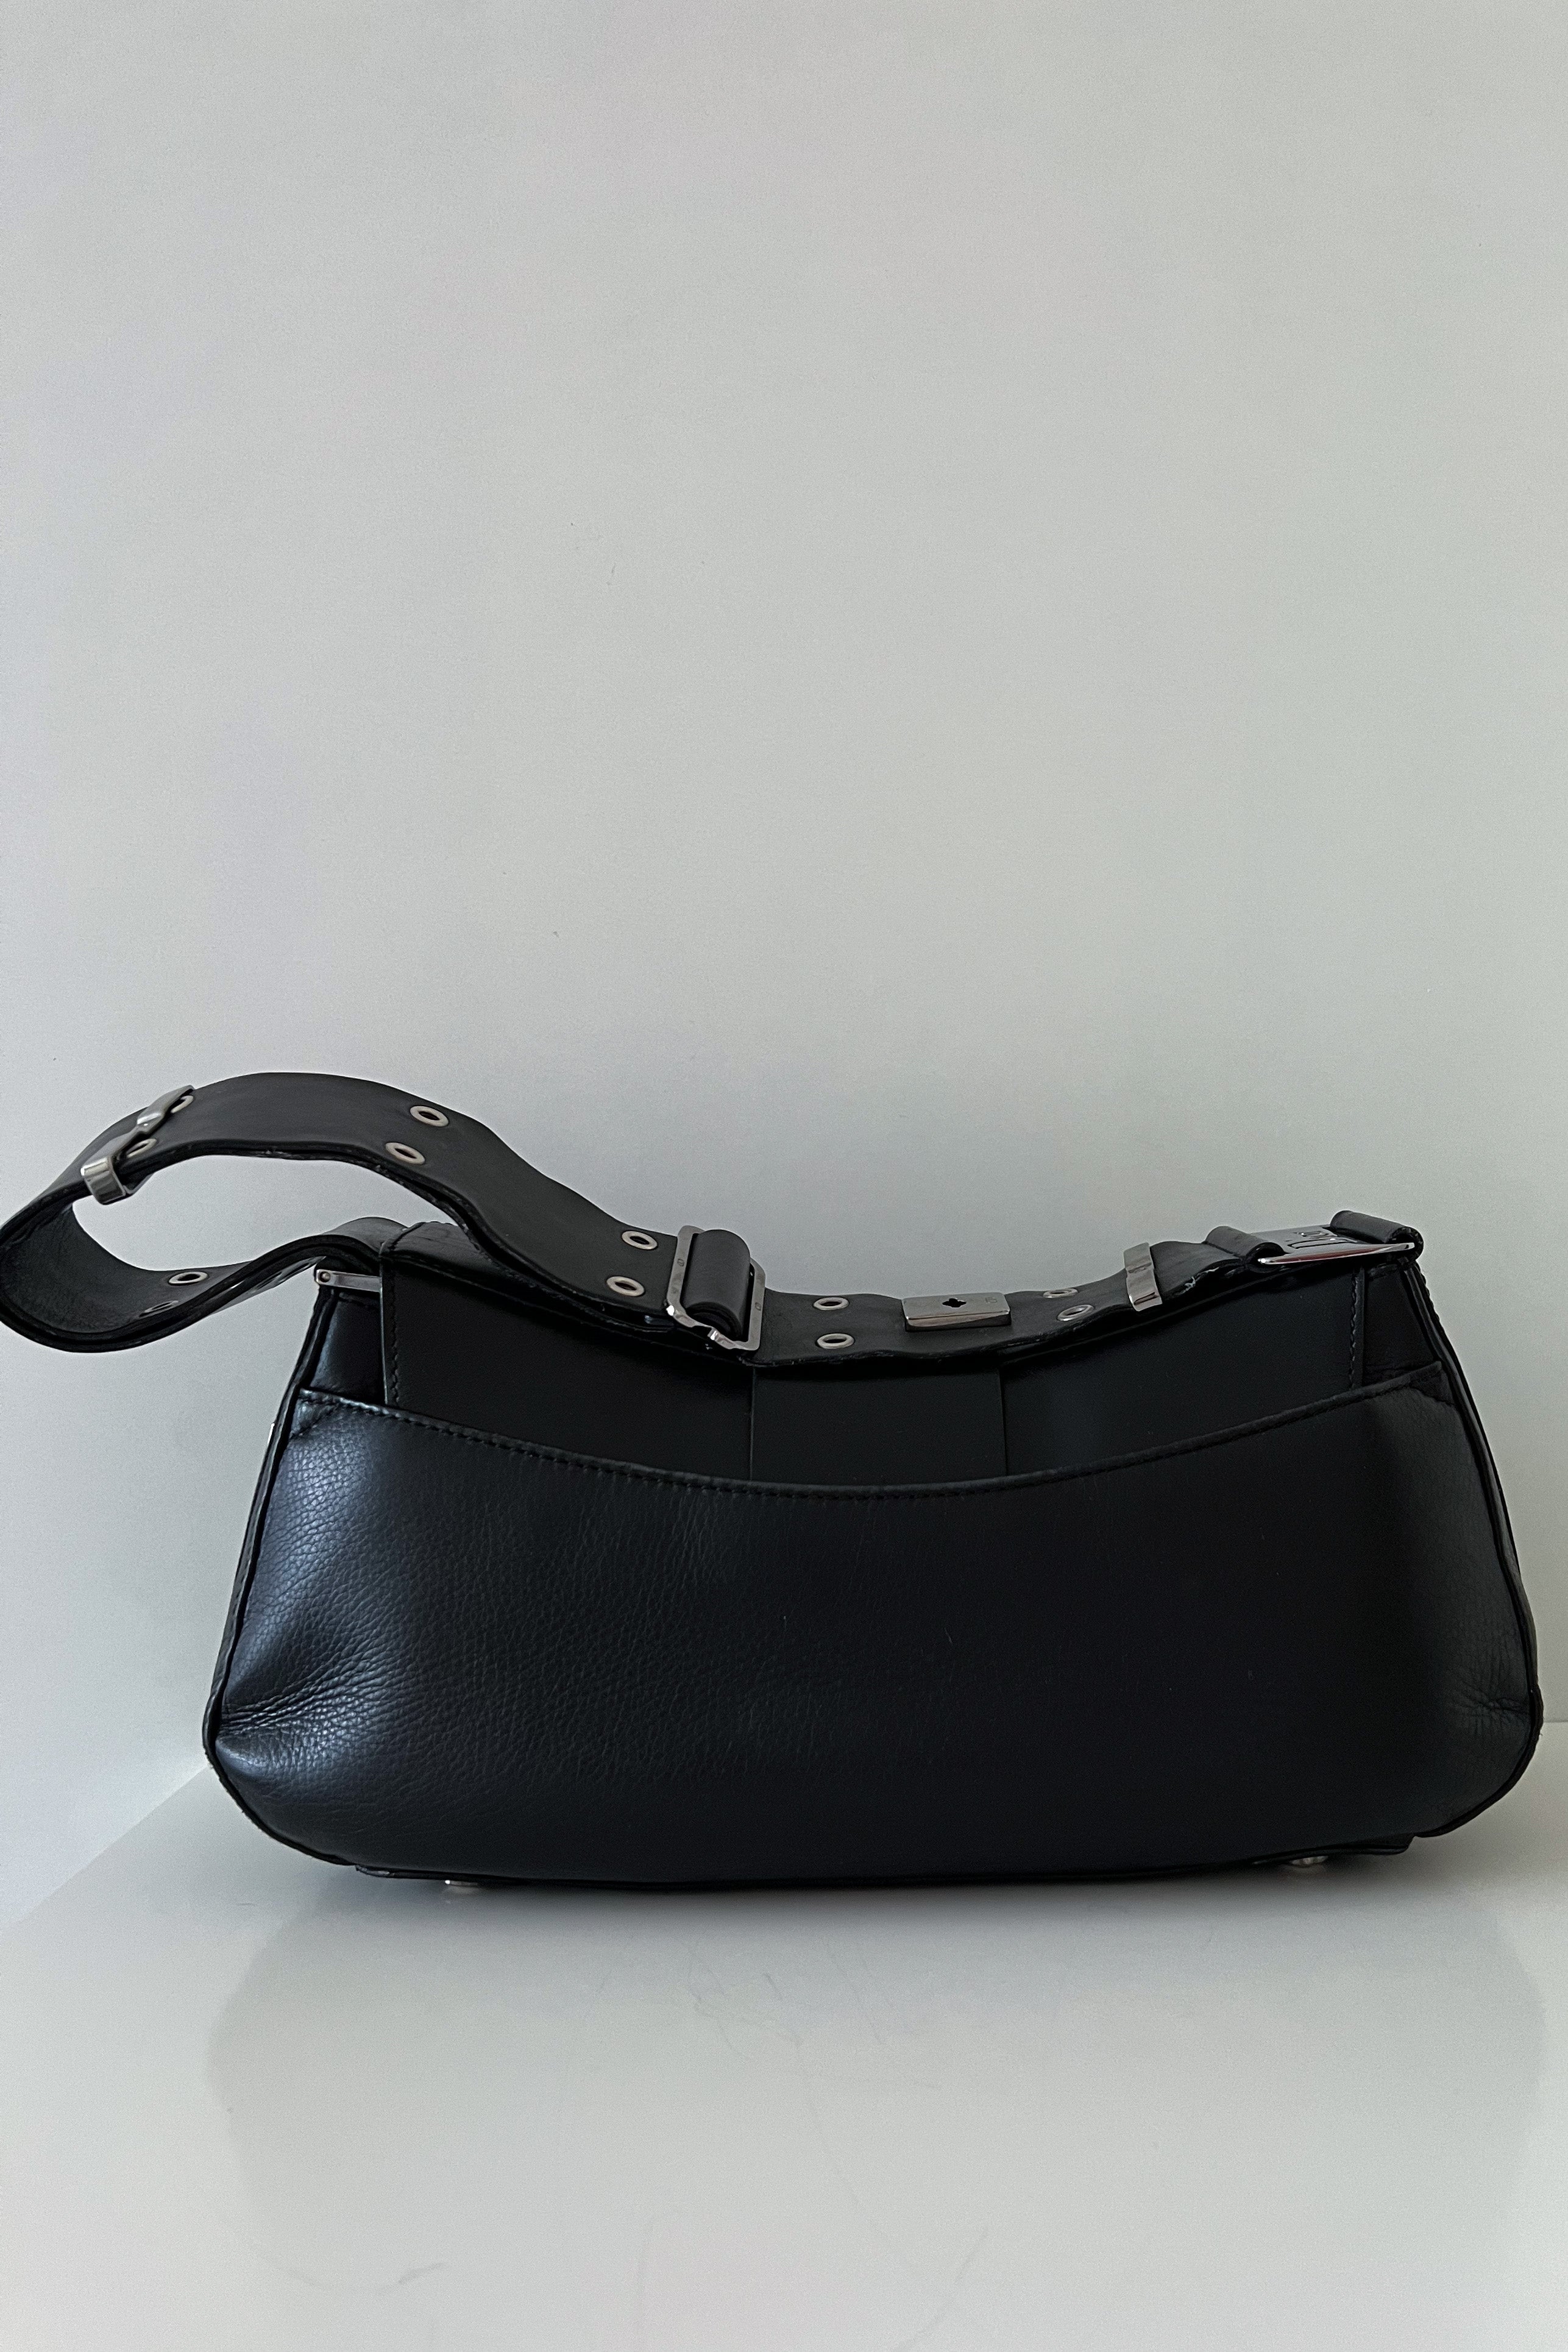 Dior Black Leather Street Chic Columbus Avenue Shoulder Bag Dior